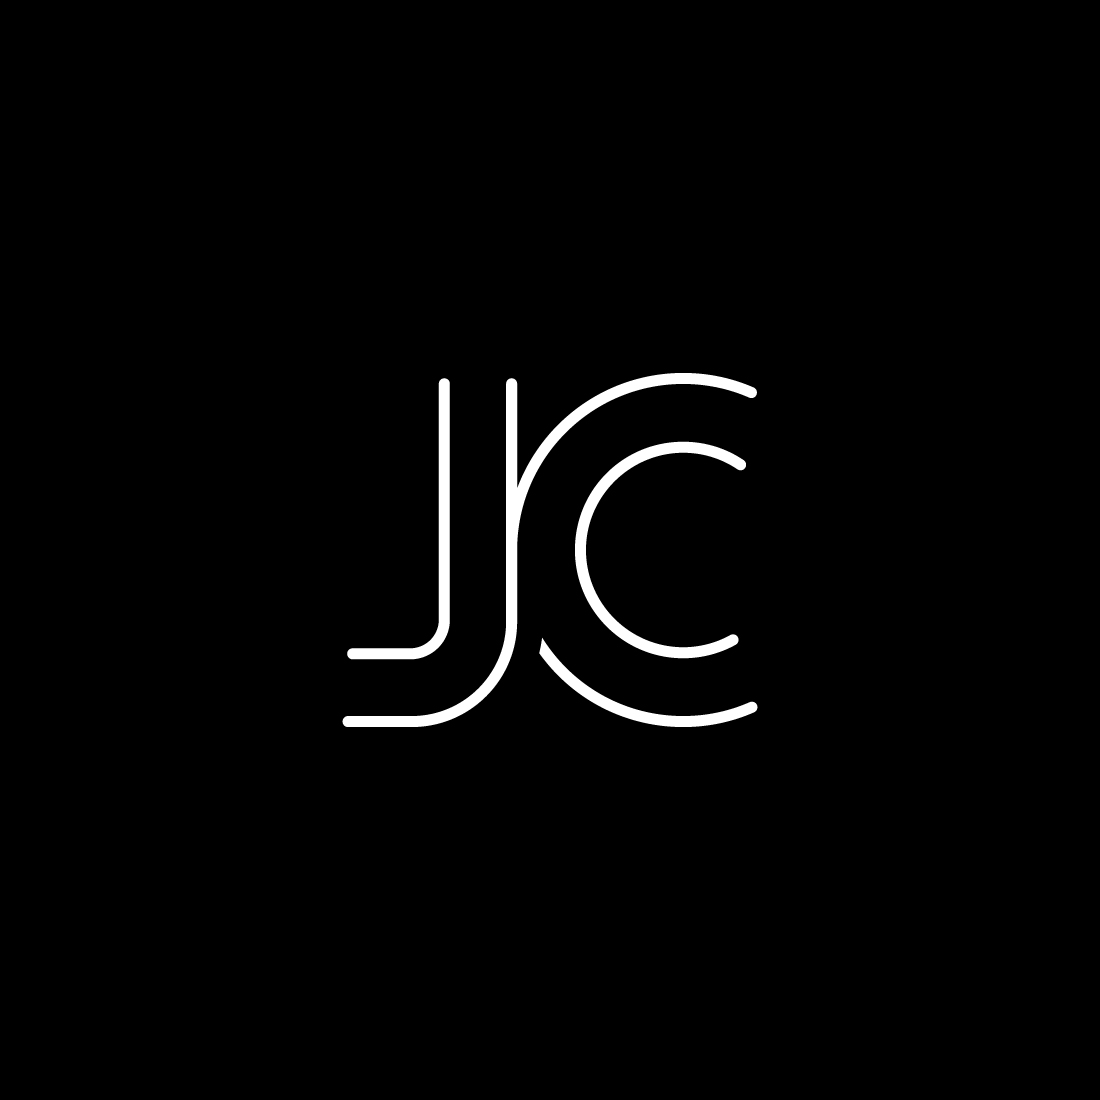 JC Line Letter Logo cover image.